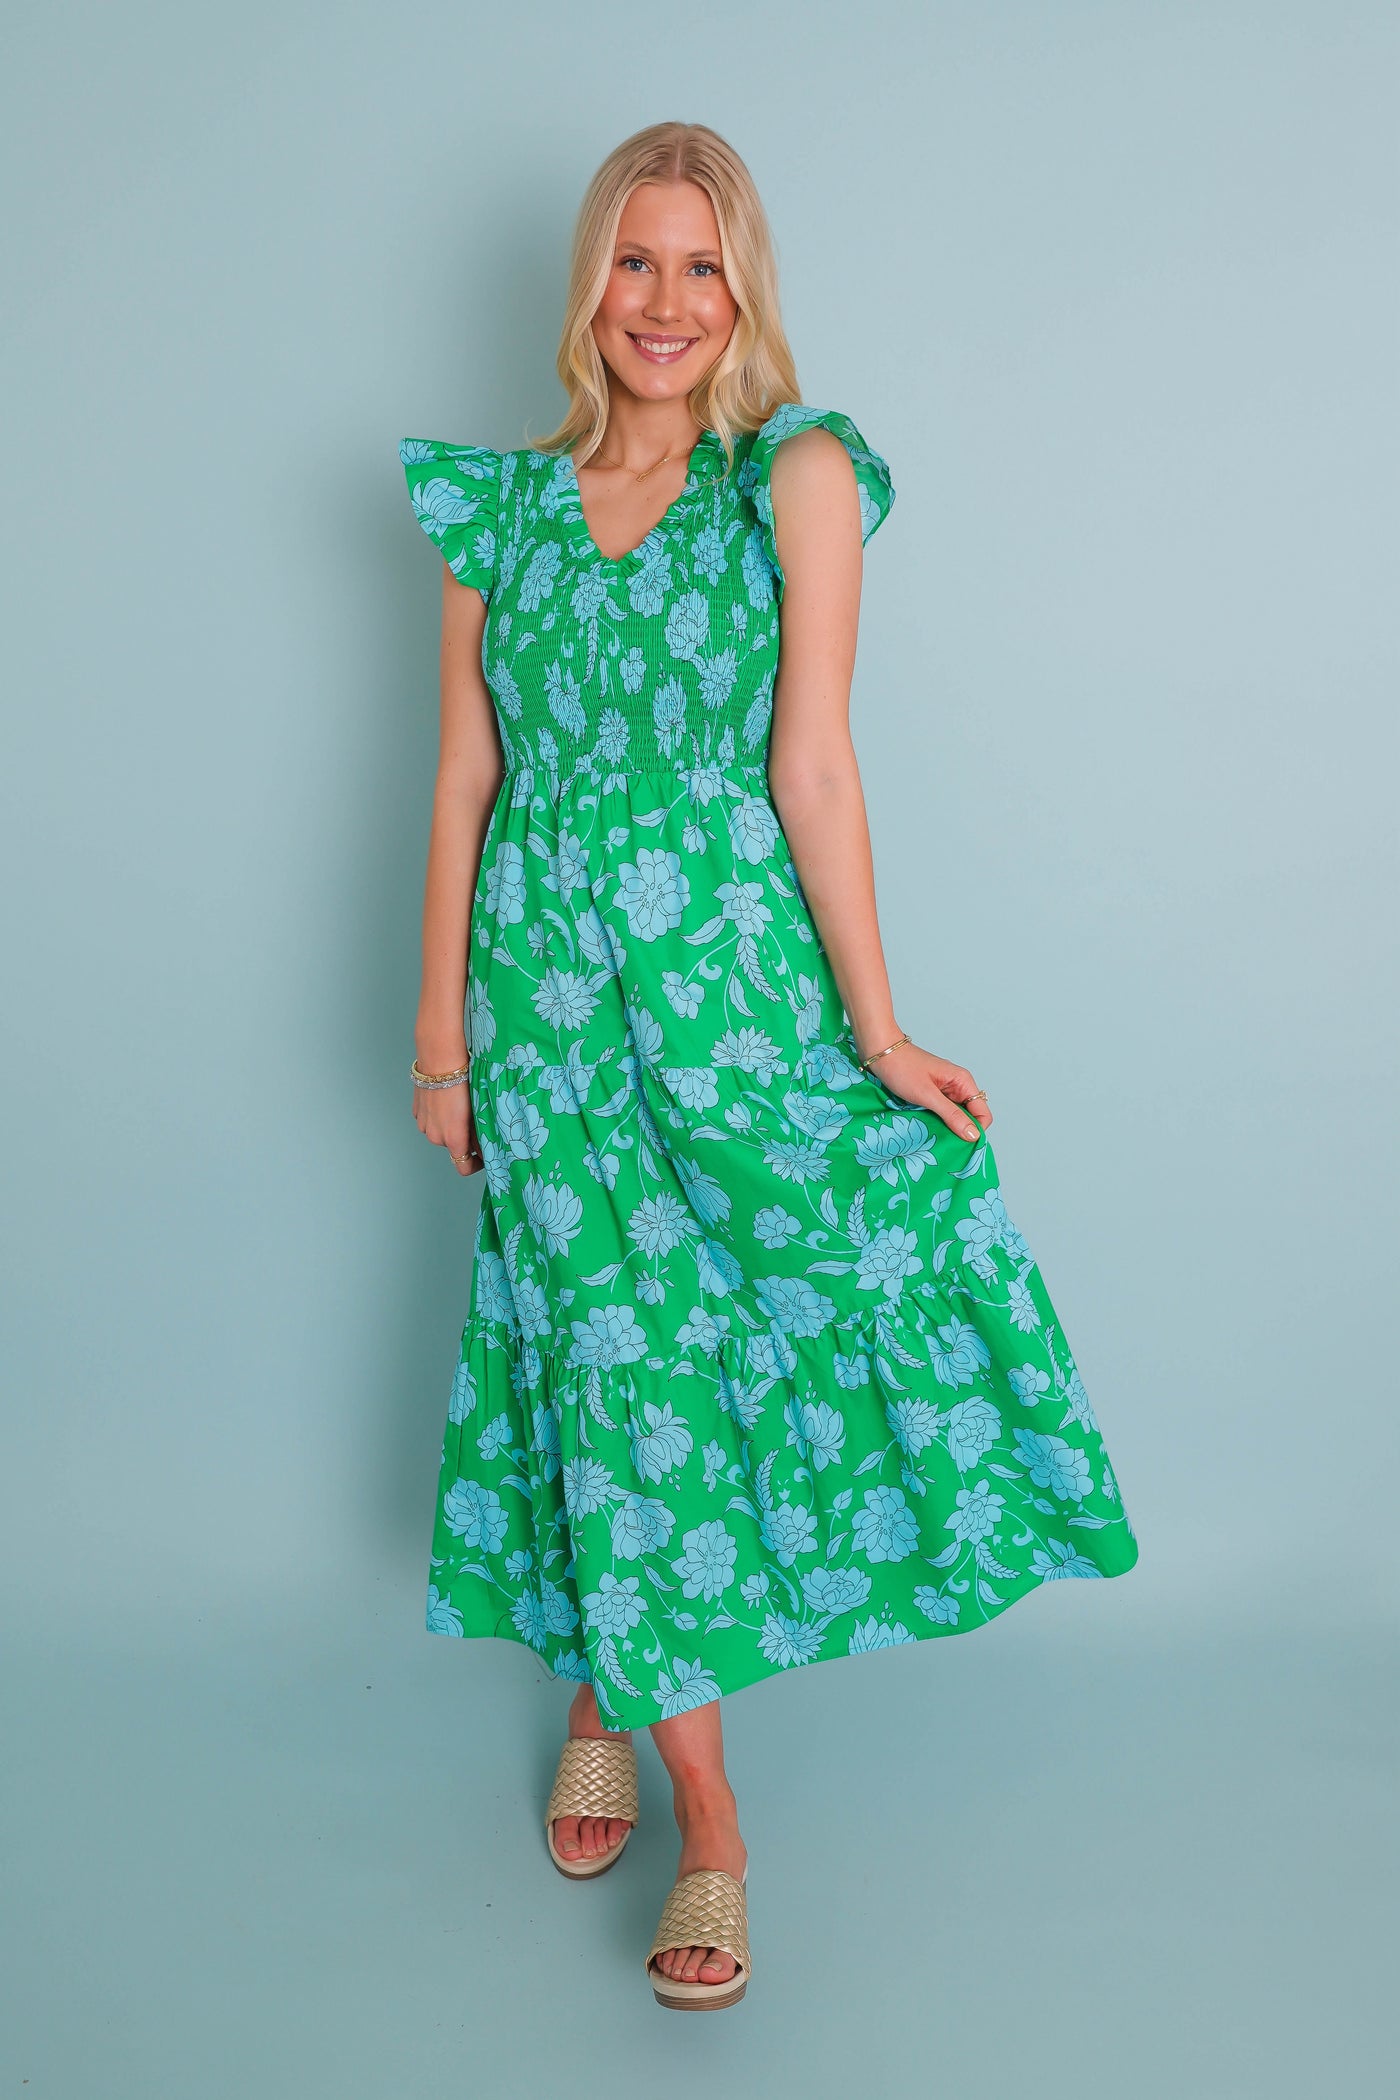 Women's Floral Smocked Midi Dress- Women's Green Floral Midi- Sugar Lips Midi Dress